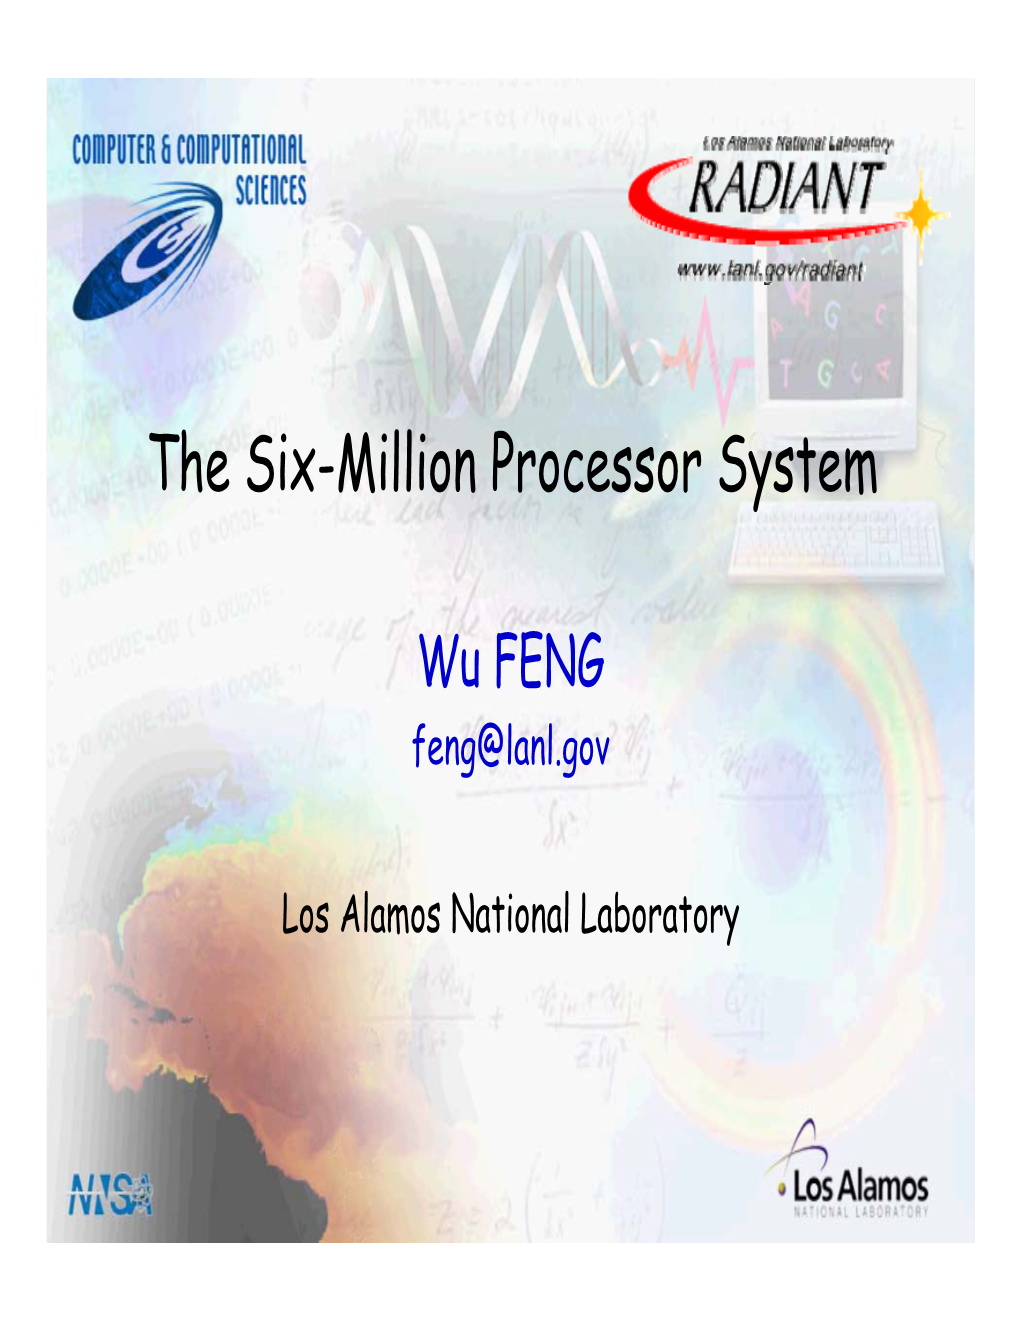 The Six-Million Processor System